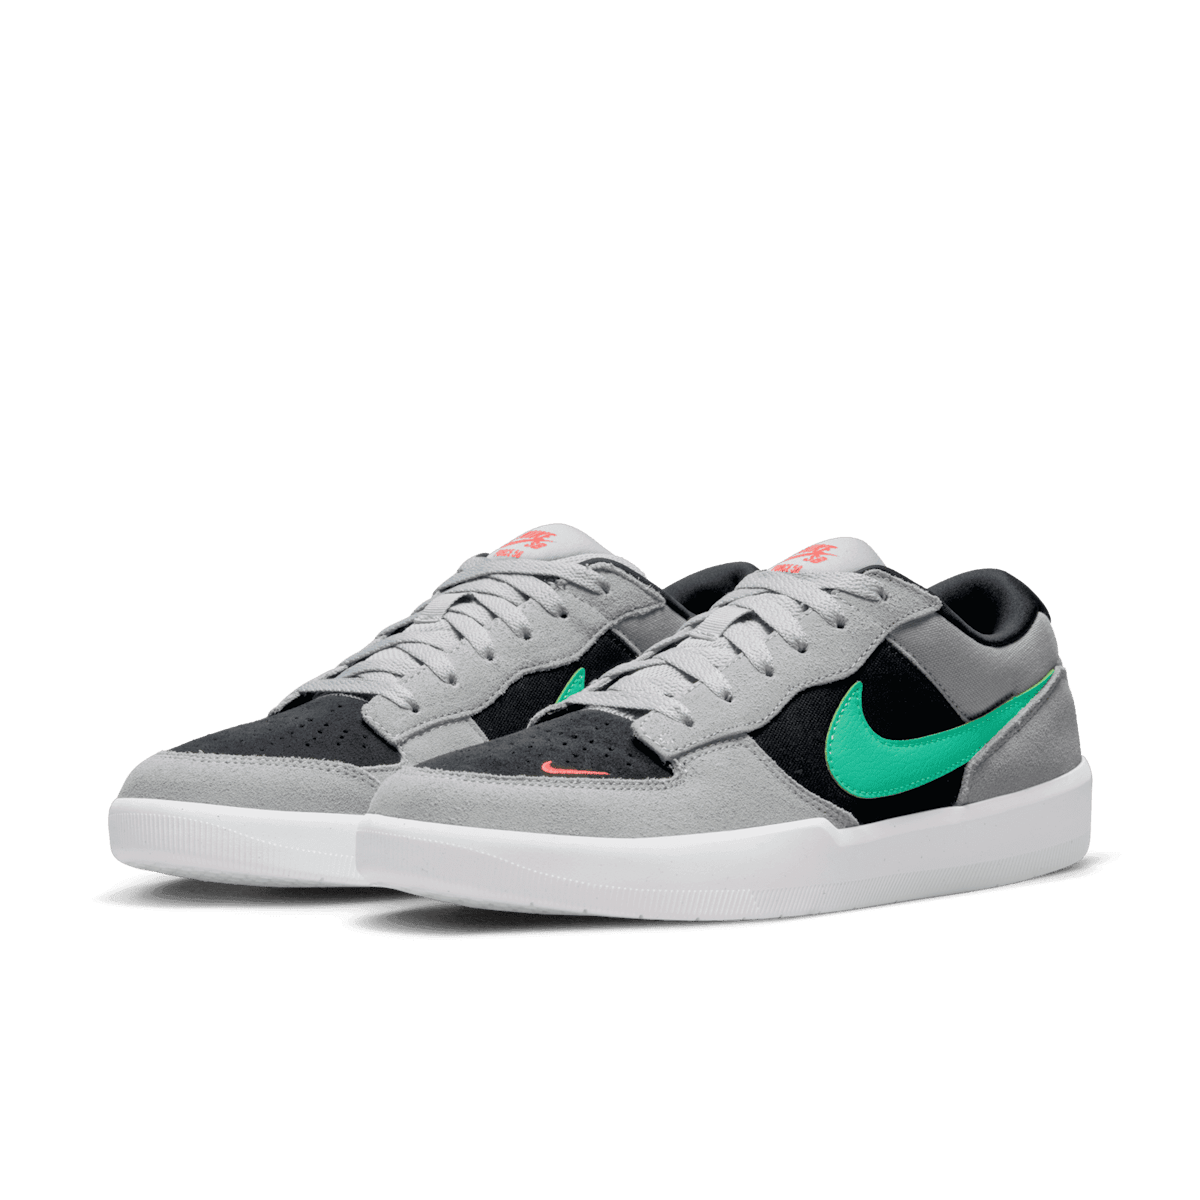 Nike SB Force 58 Skate Shoes